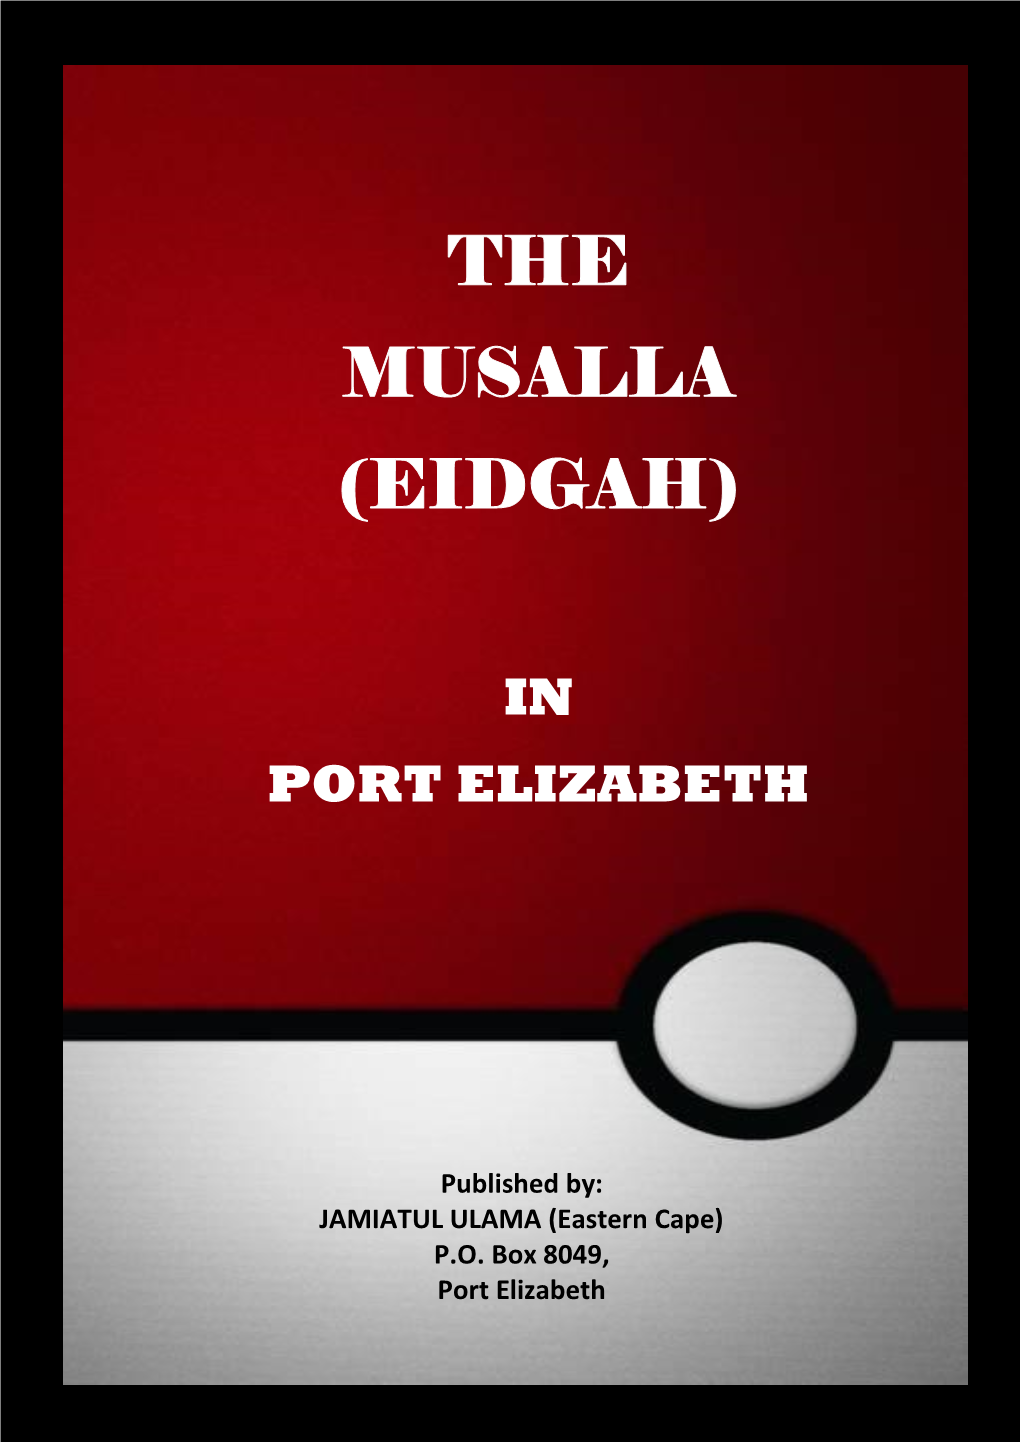 The Musalla (Eidgah) in Port Elizabeth